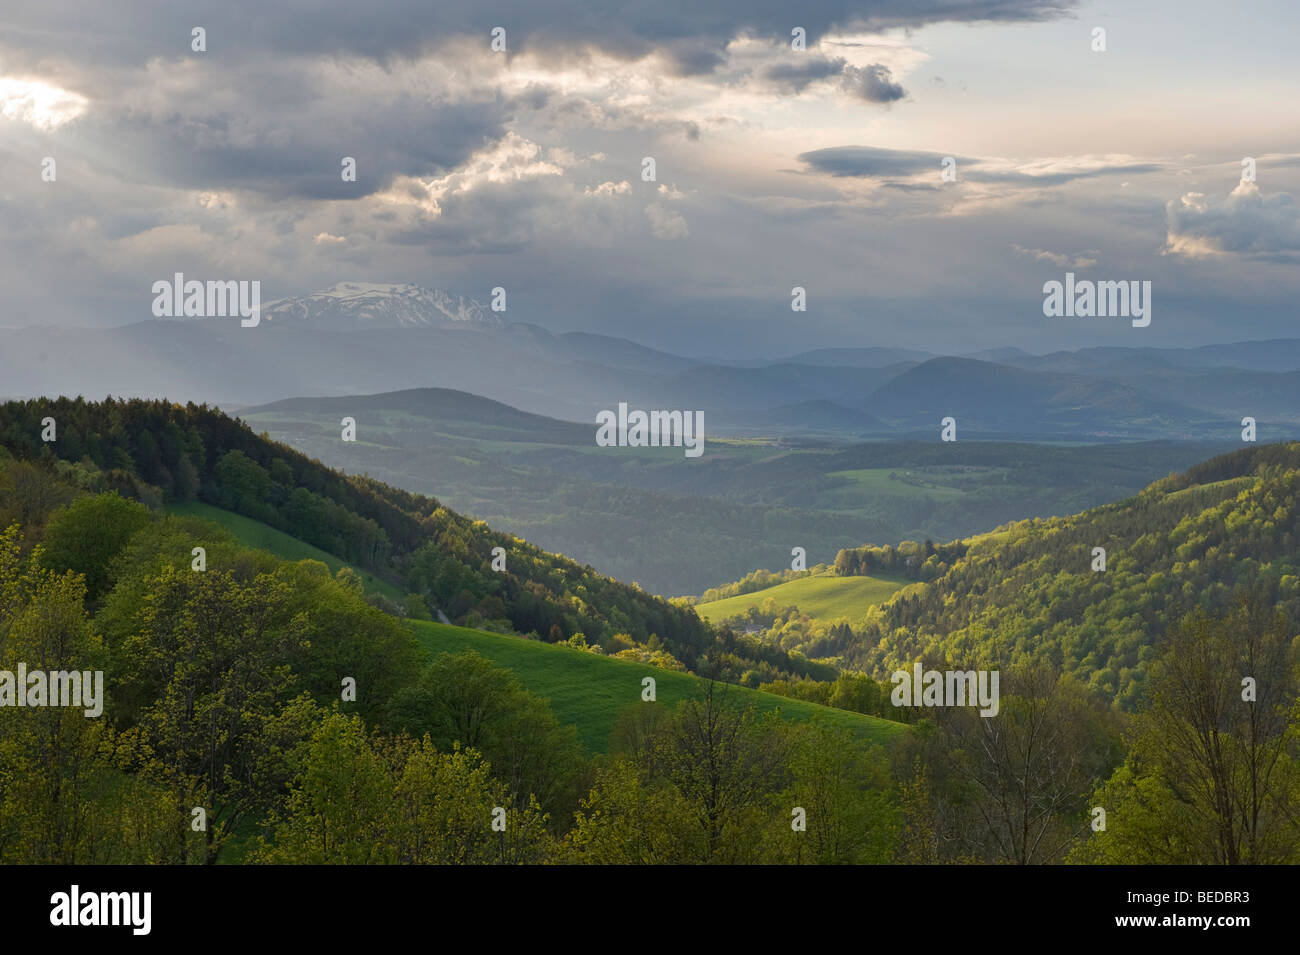 View towards Schneeberg mountain with an approaching thunderstorm, Bucklige Welt, Lower Austria, Austria, Europe Stock Photo